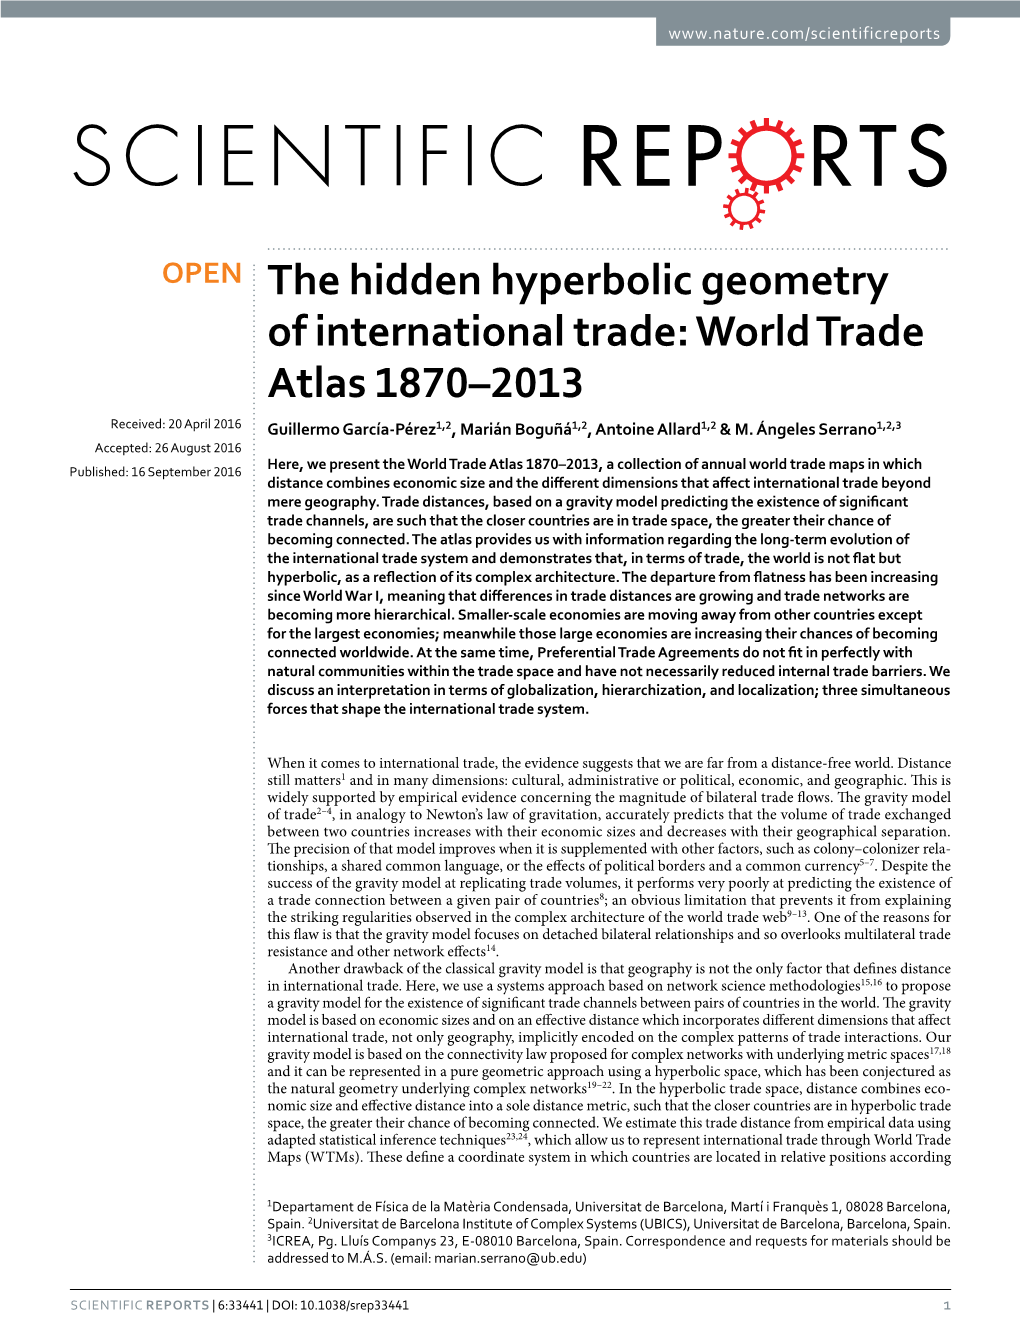 The Hidden Hyperbolic Geometry of International Trade